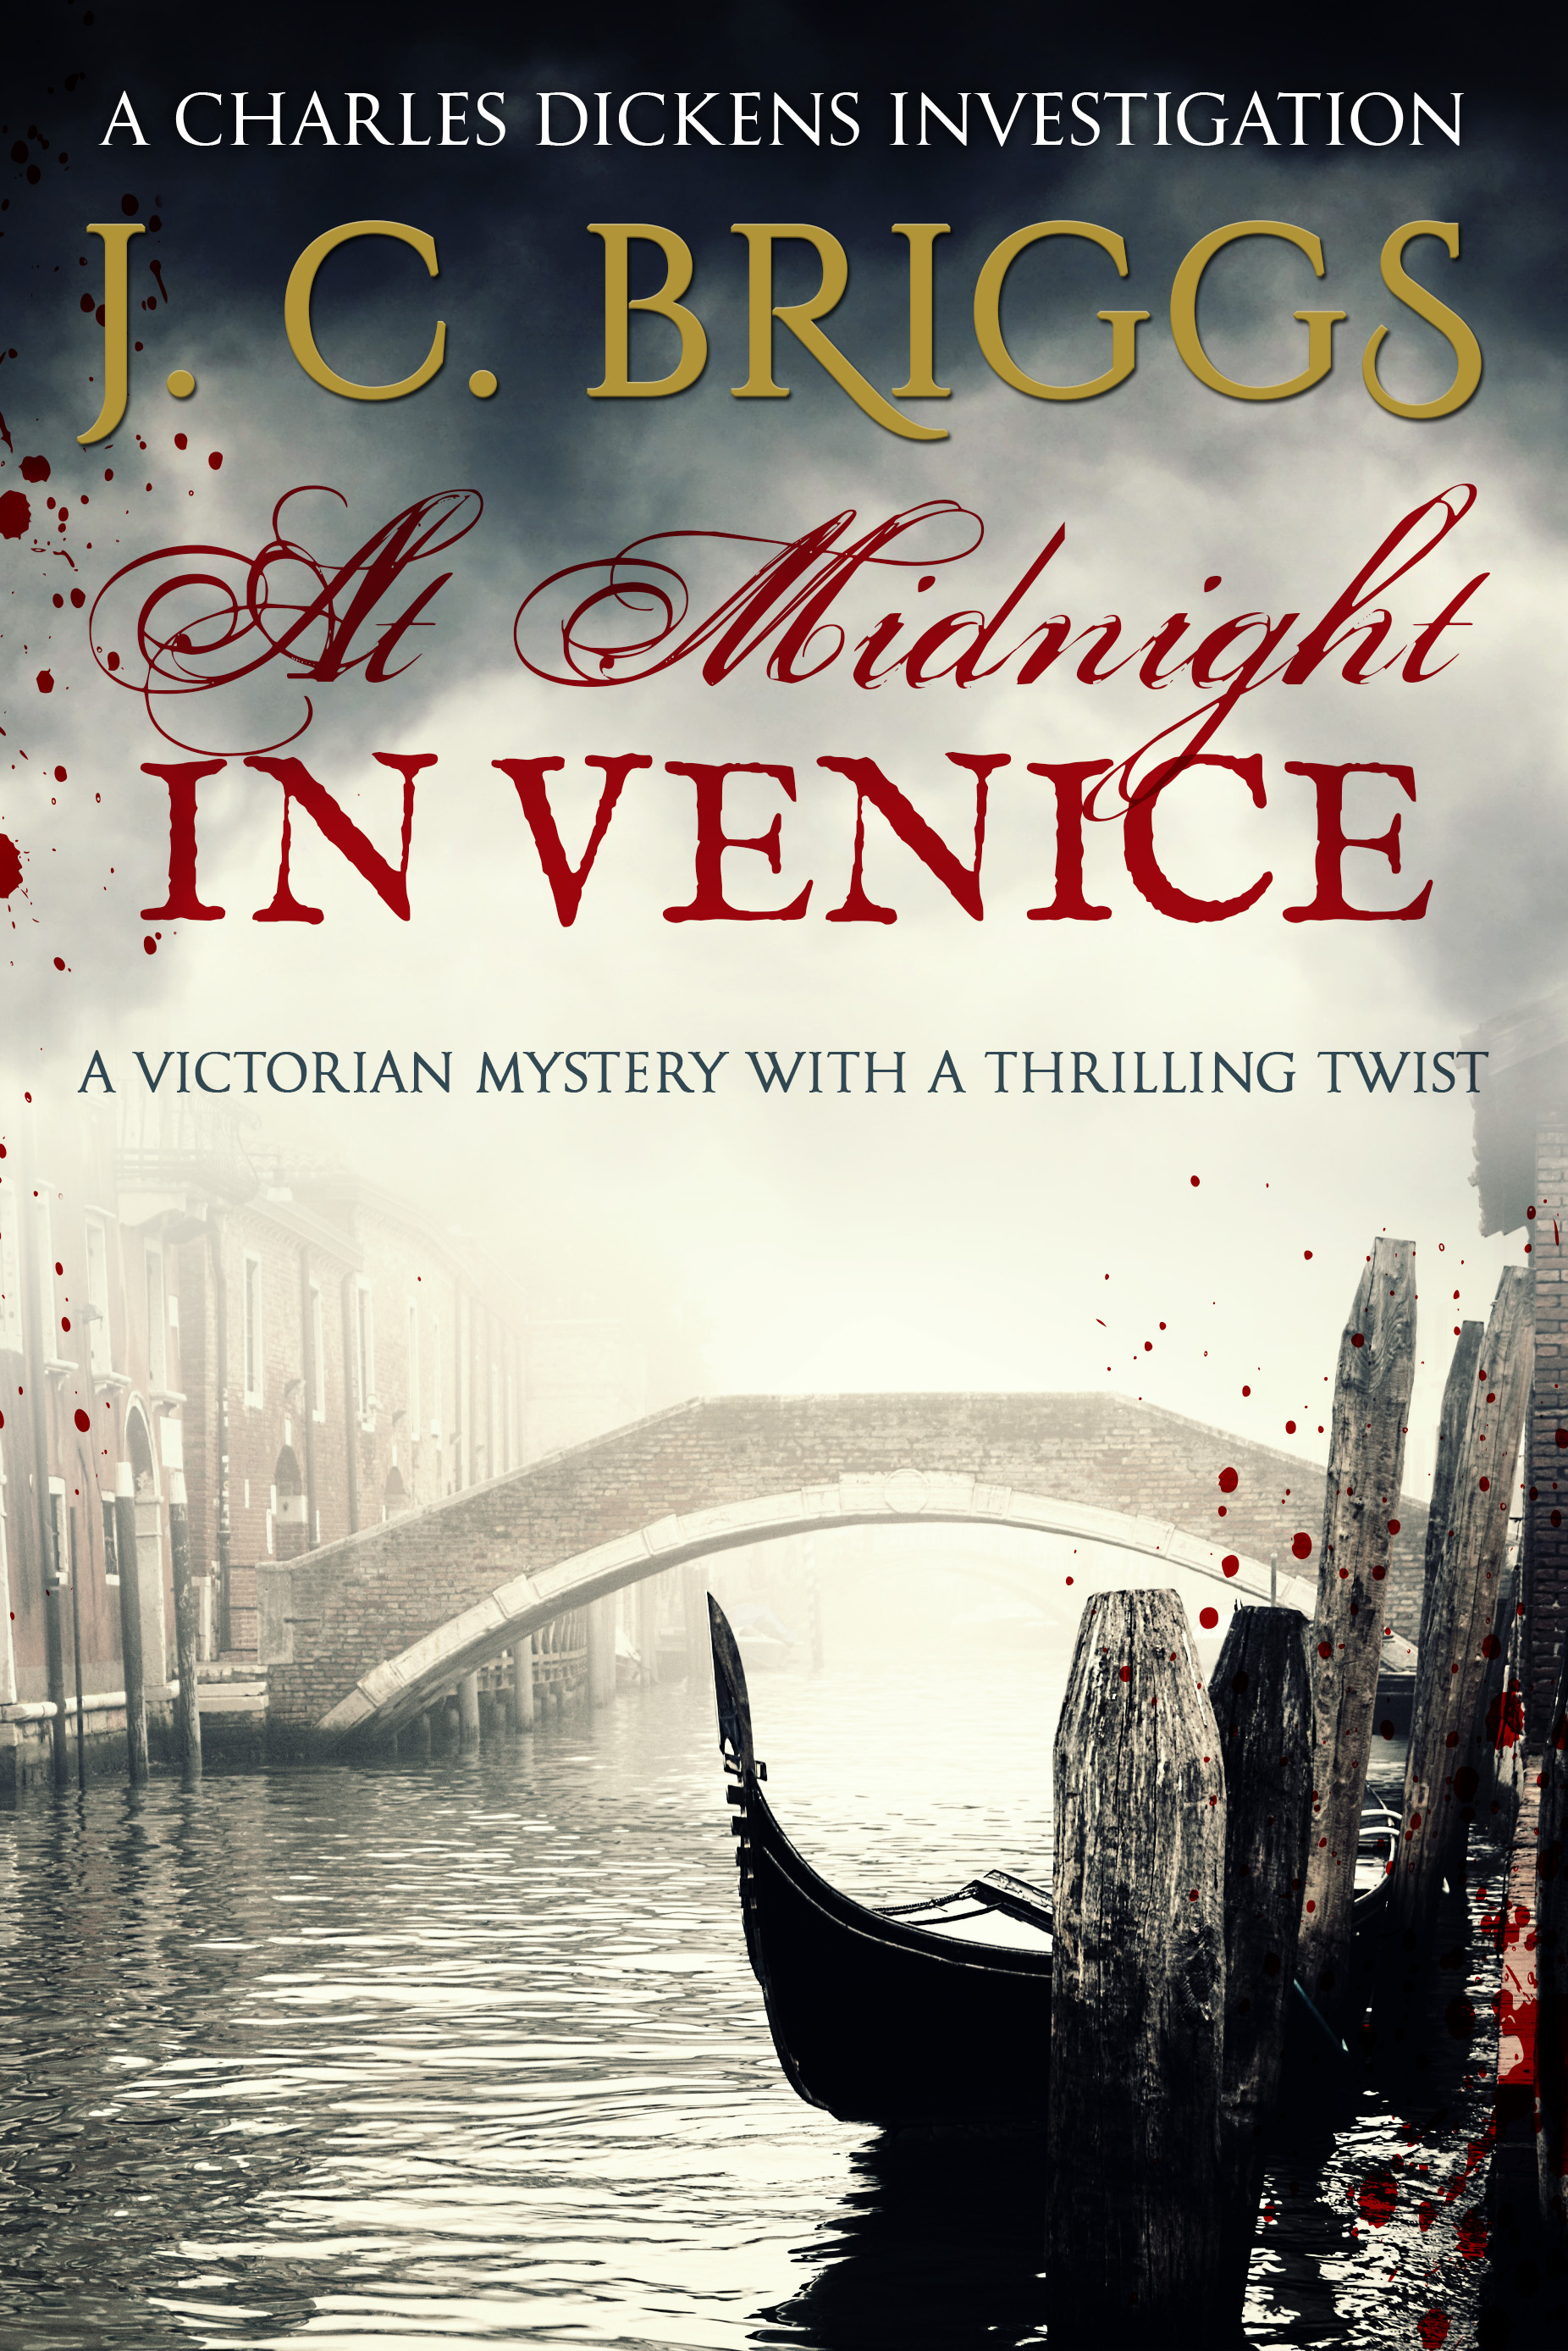 At Midnight In Venice